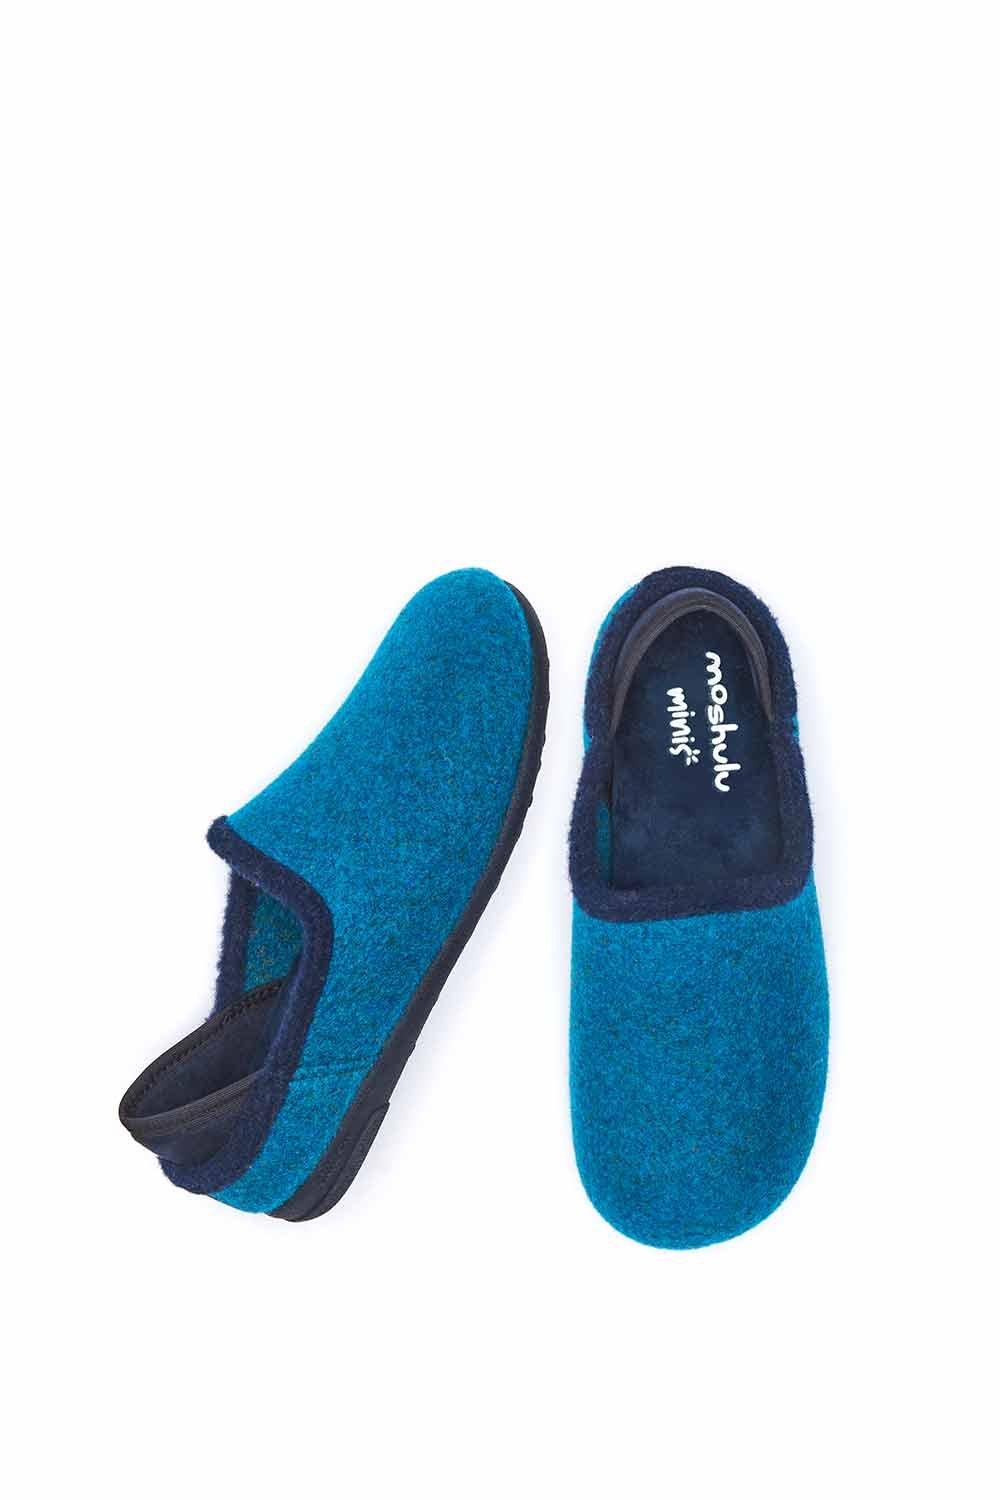 ’Mini Matmi’ Recycled Felt Slippers